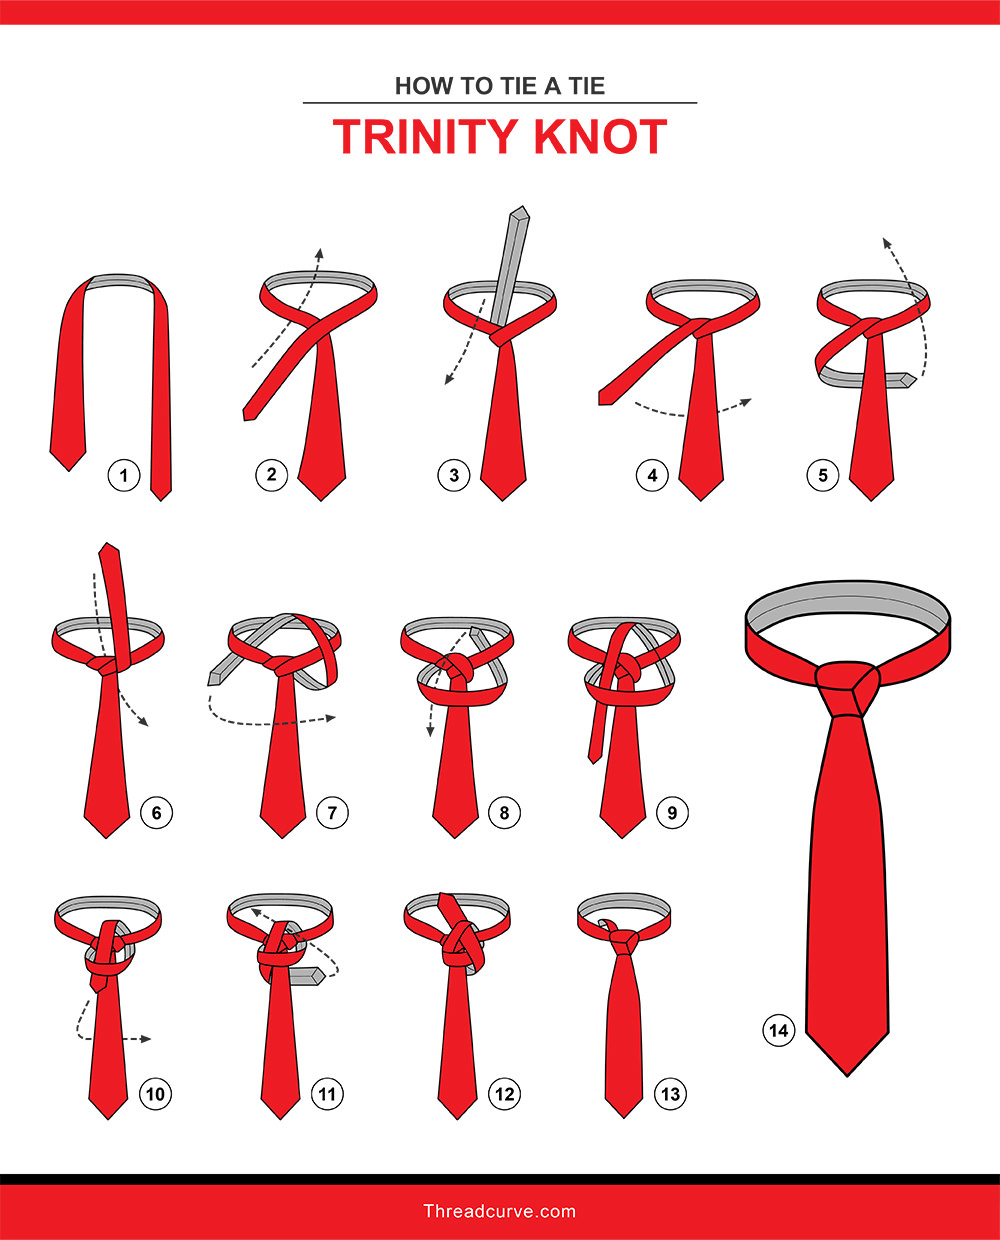 How to tie a trinity tie know (illustration)